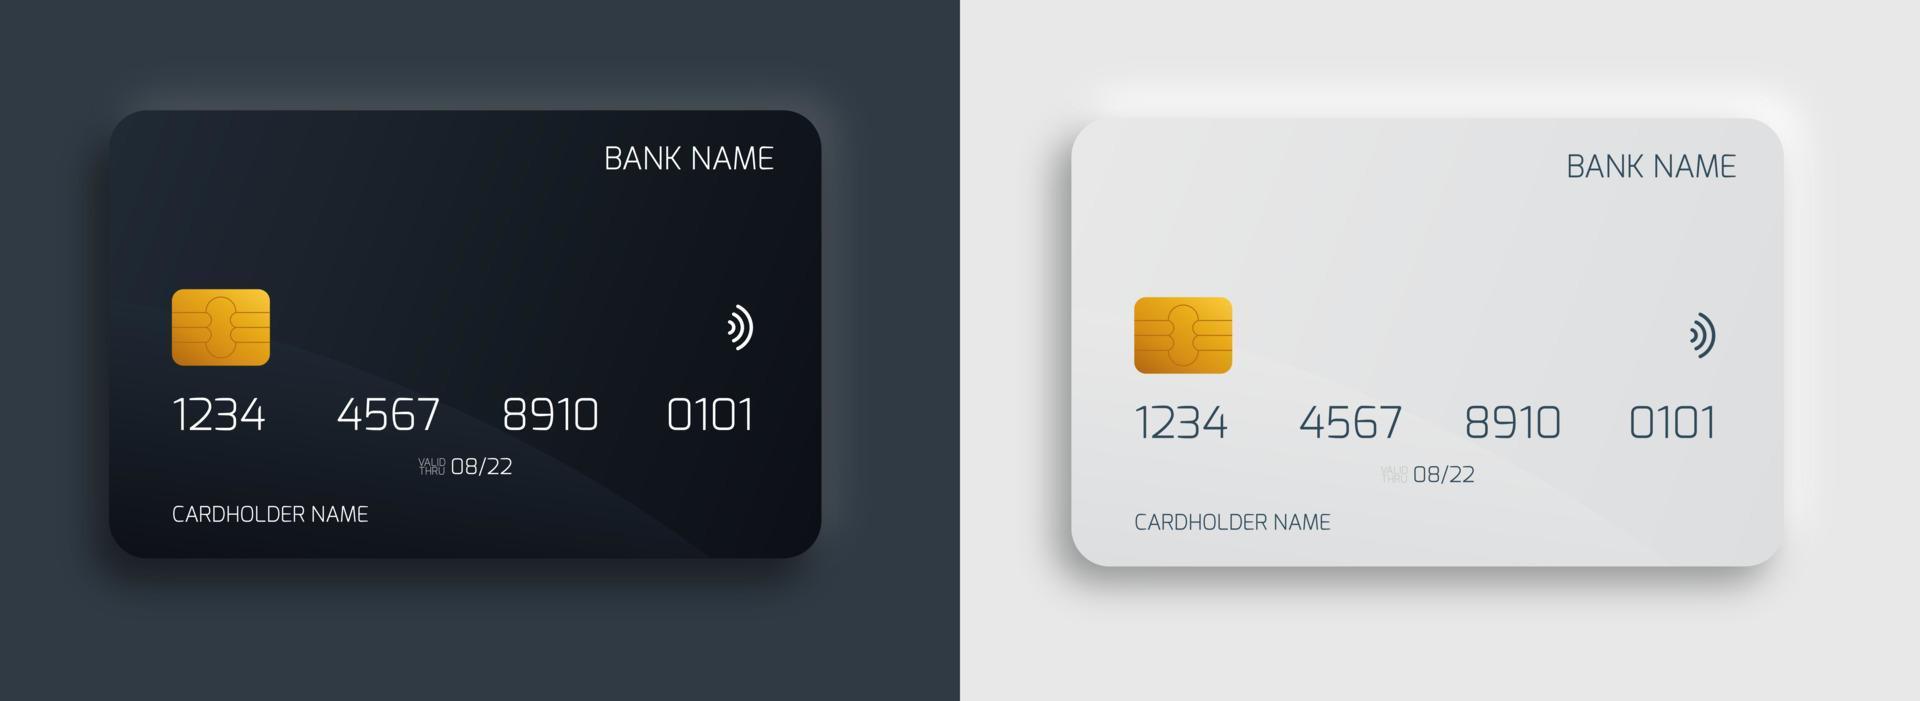 conjunto de modelo de design de cartão de banco de plástico. maquete isolada de cartões de crédito ou débito com conceito de estilo de cores claras e escuras. vetor